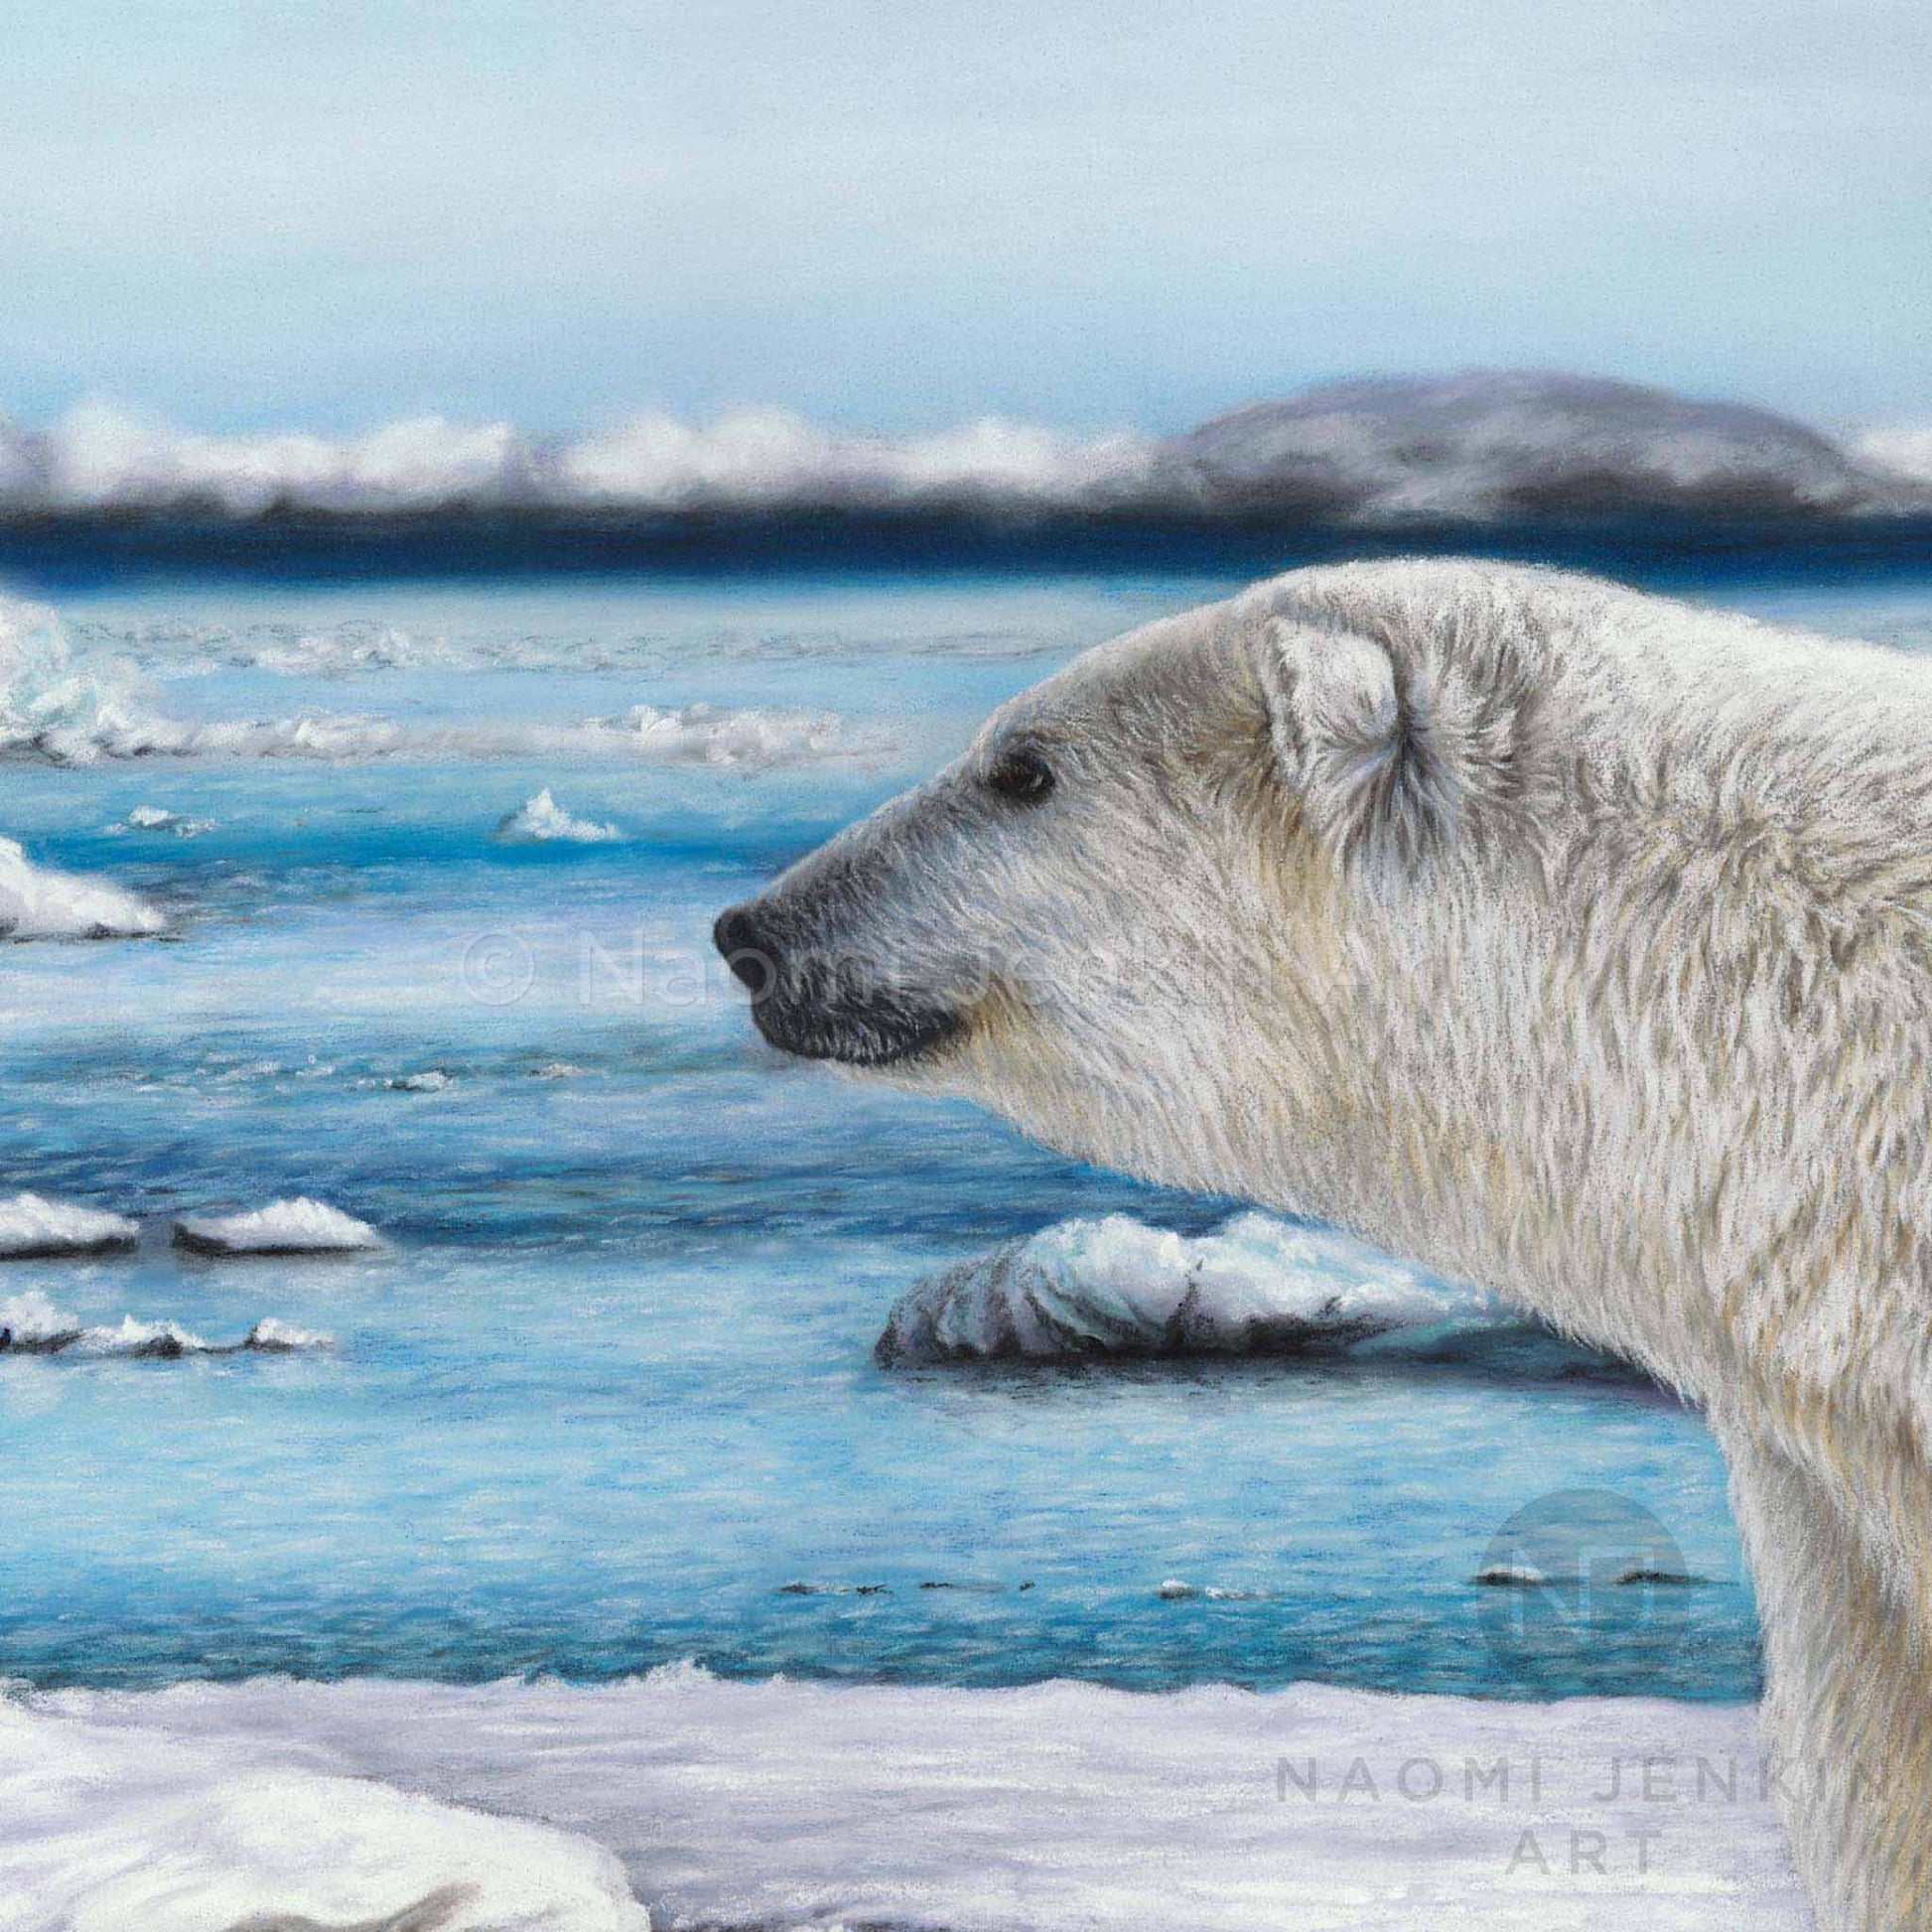 Polar bear wildlife art by Naomi Jenkin Art.